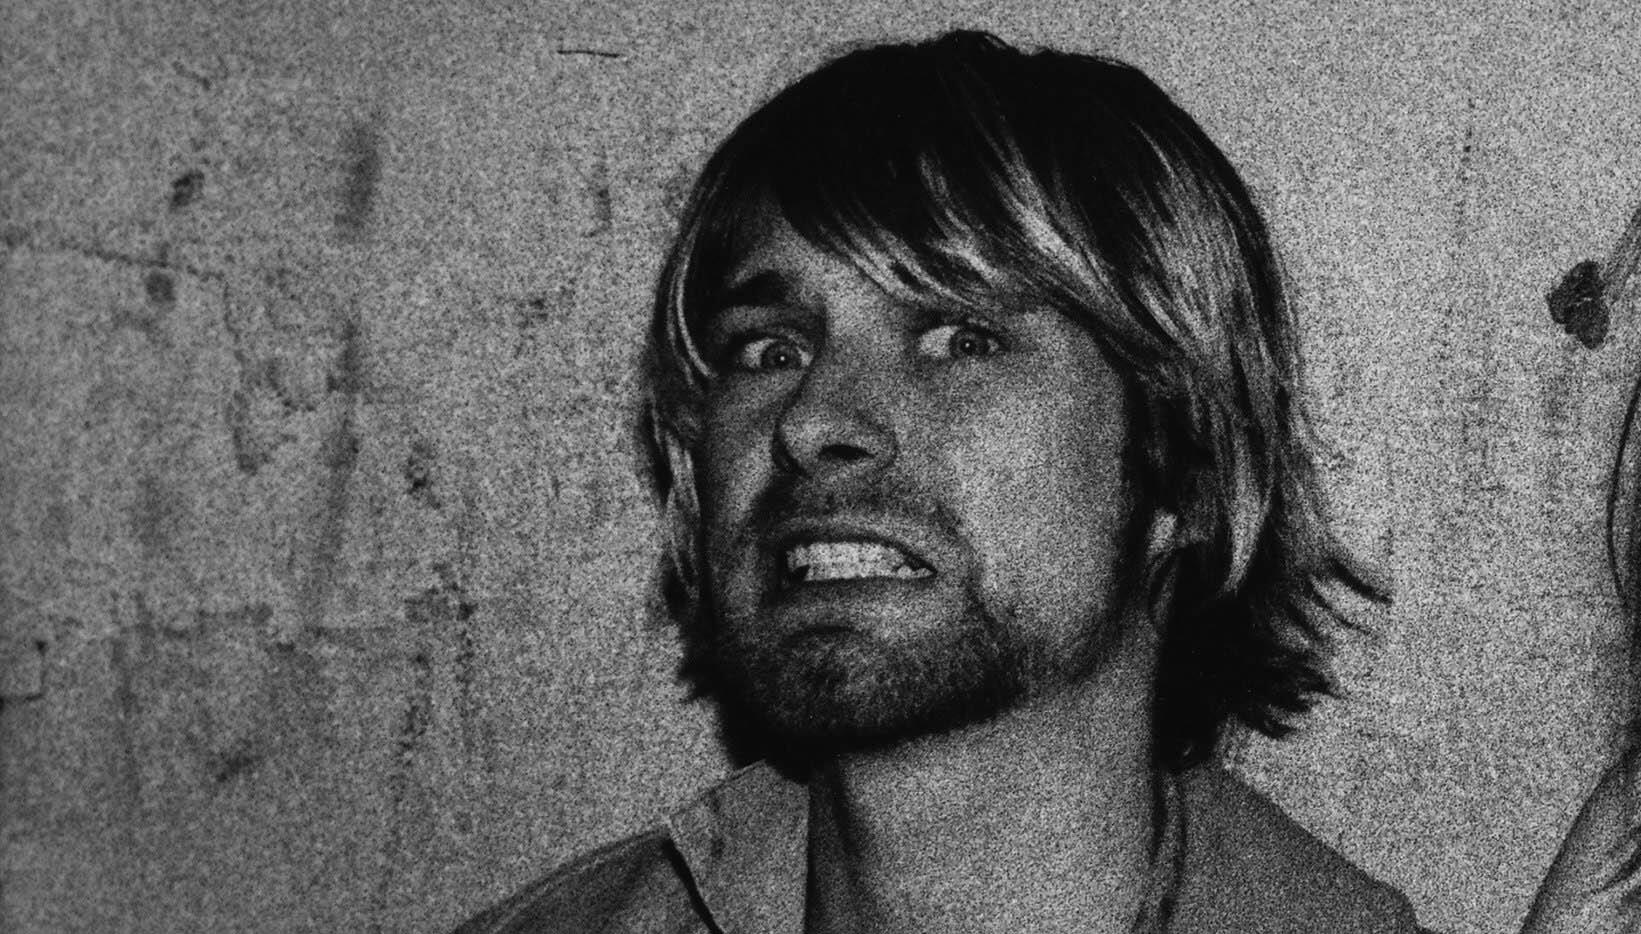 Kurt Cobain's iconic blue hair - wide 11